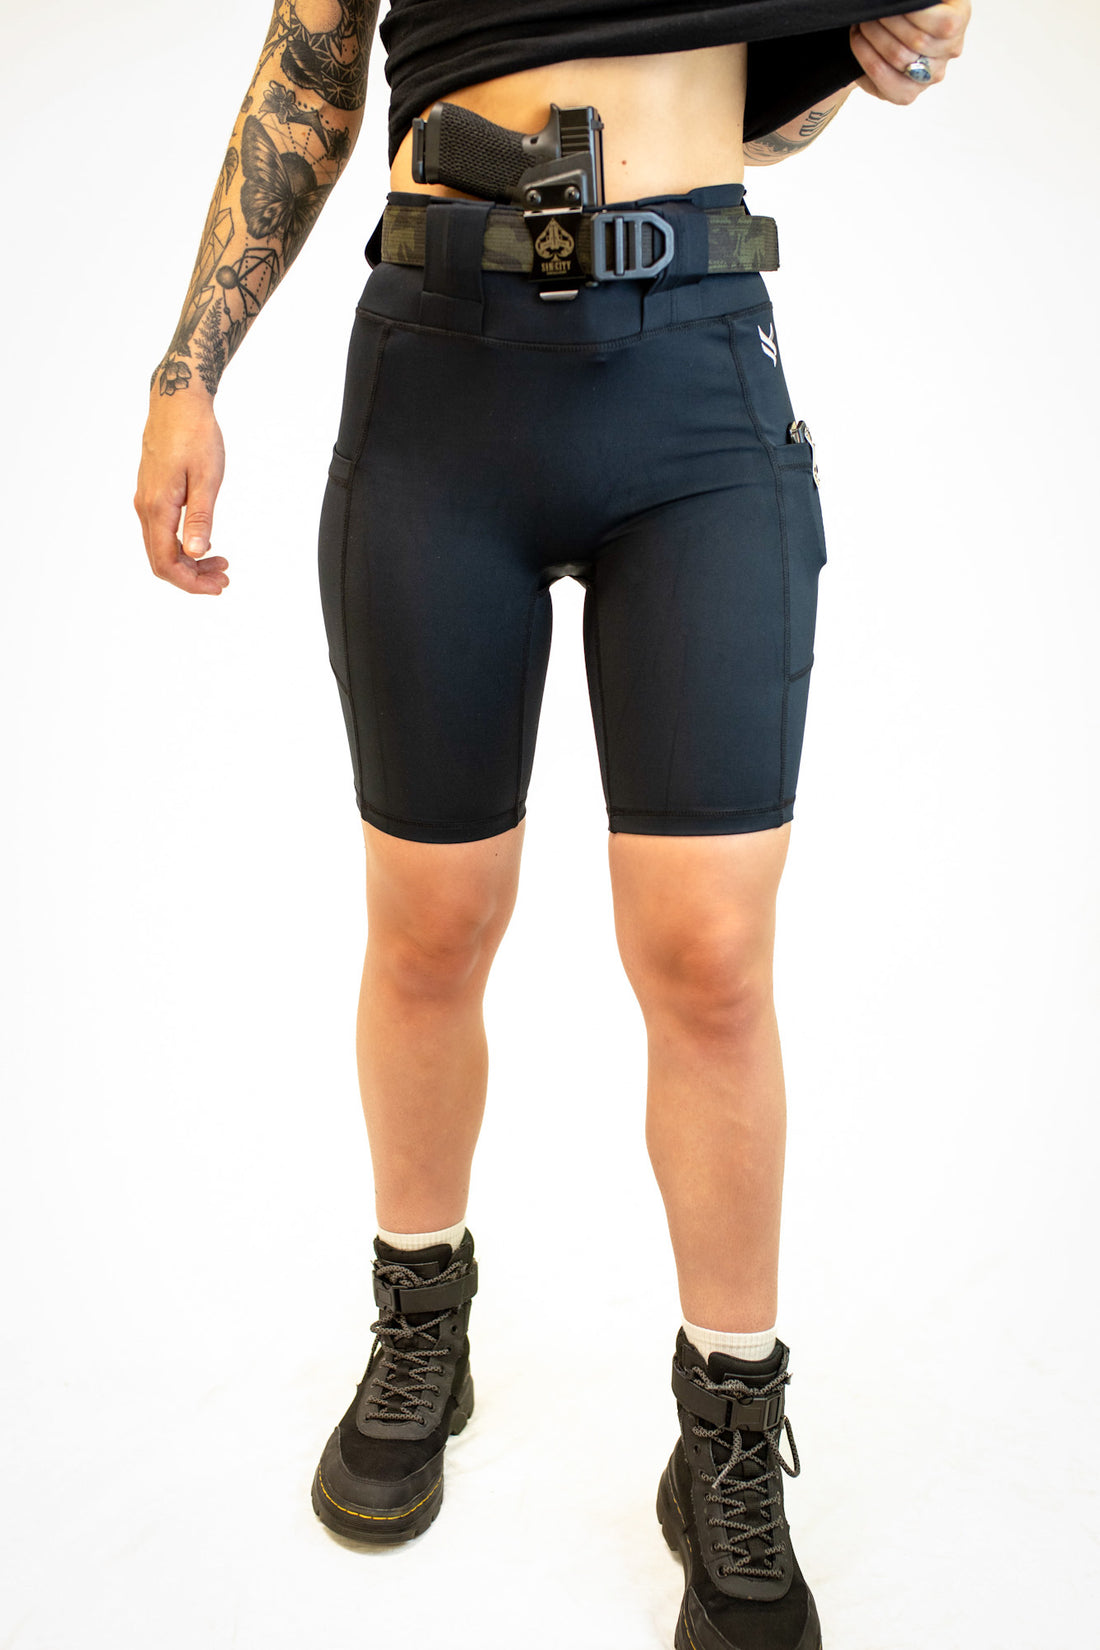 Women's Biker Carry Shorts 8" Inseam, Curvy, Black